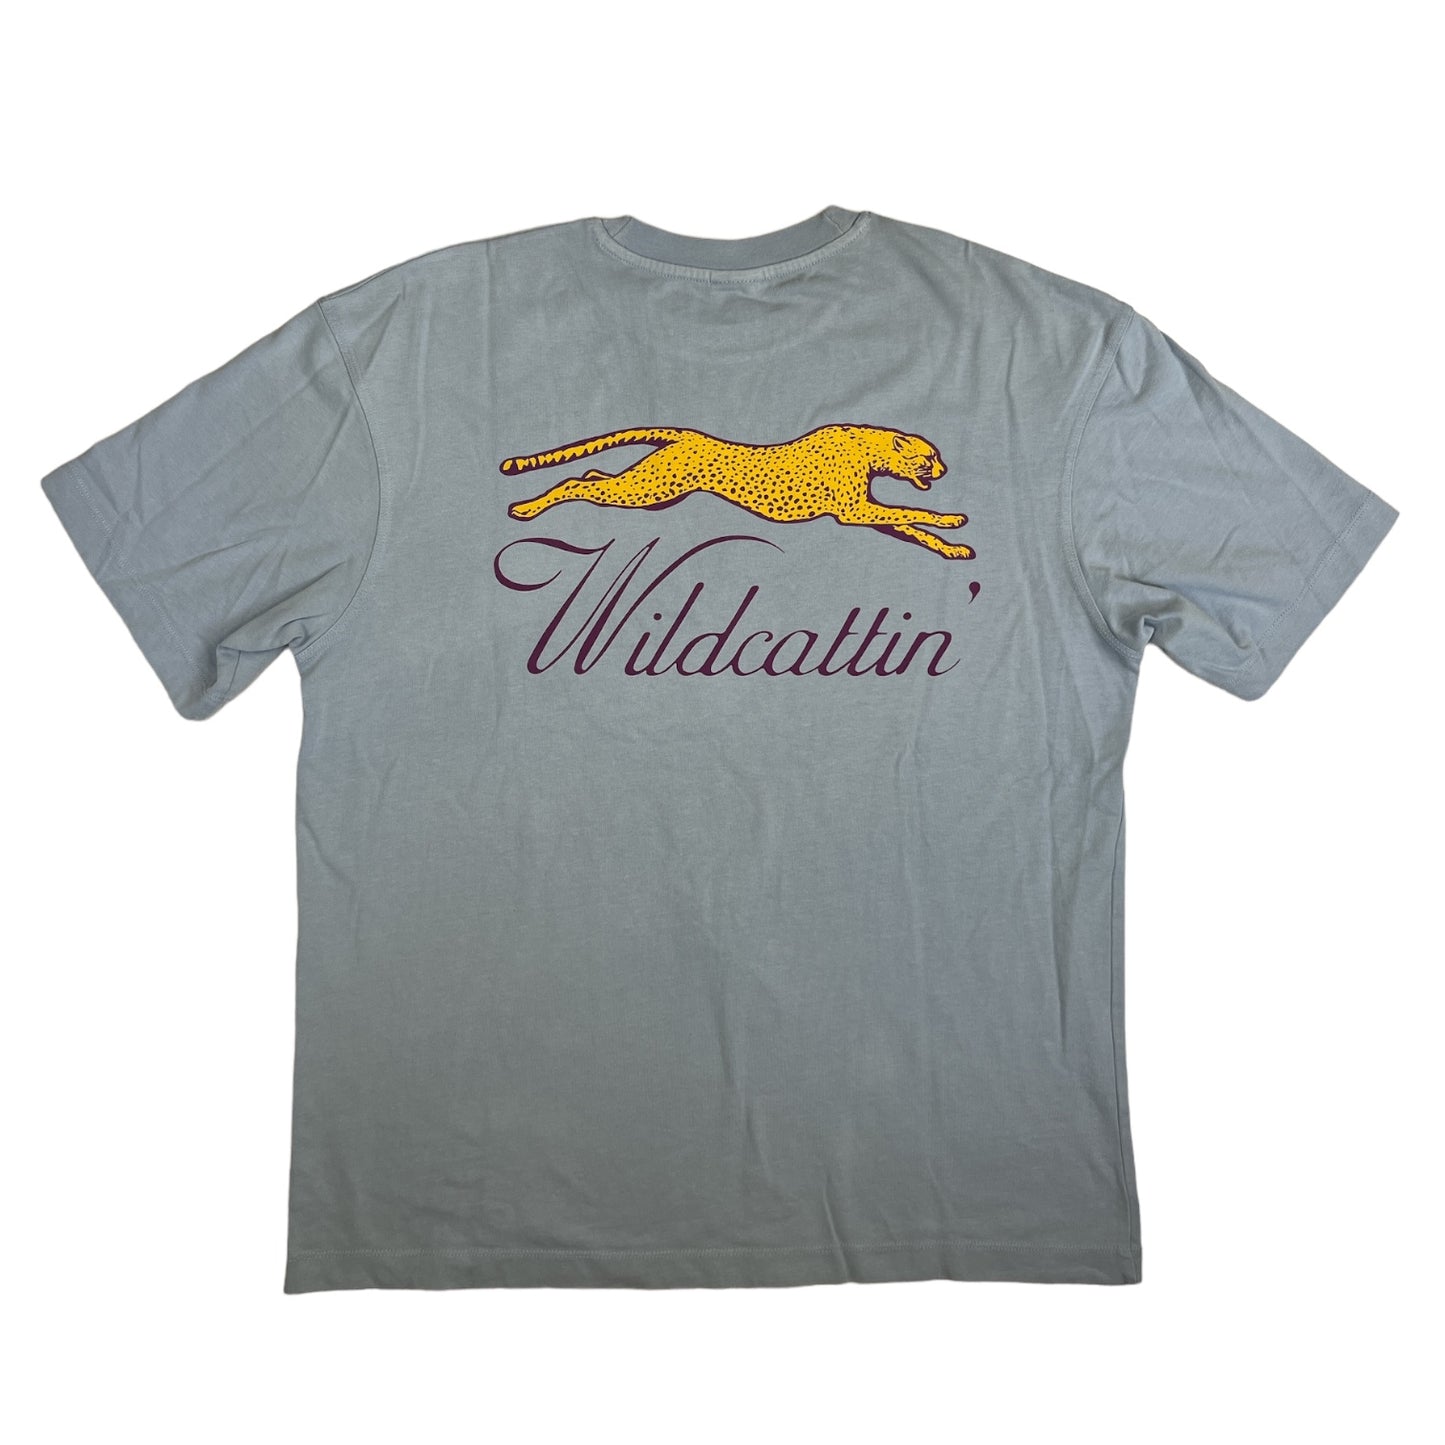 Wildcattin' T-Shirt